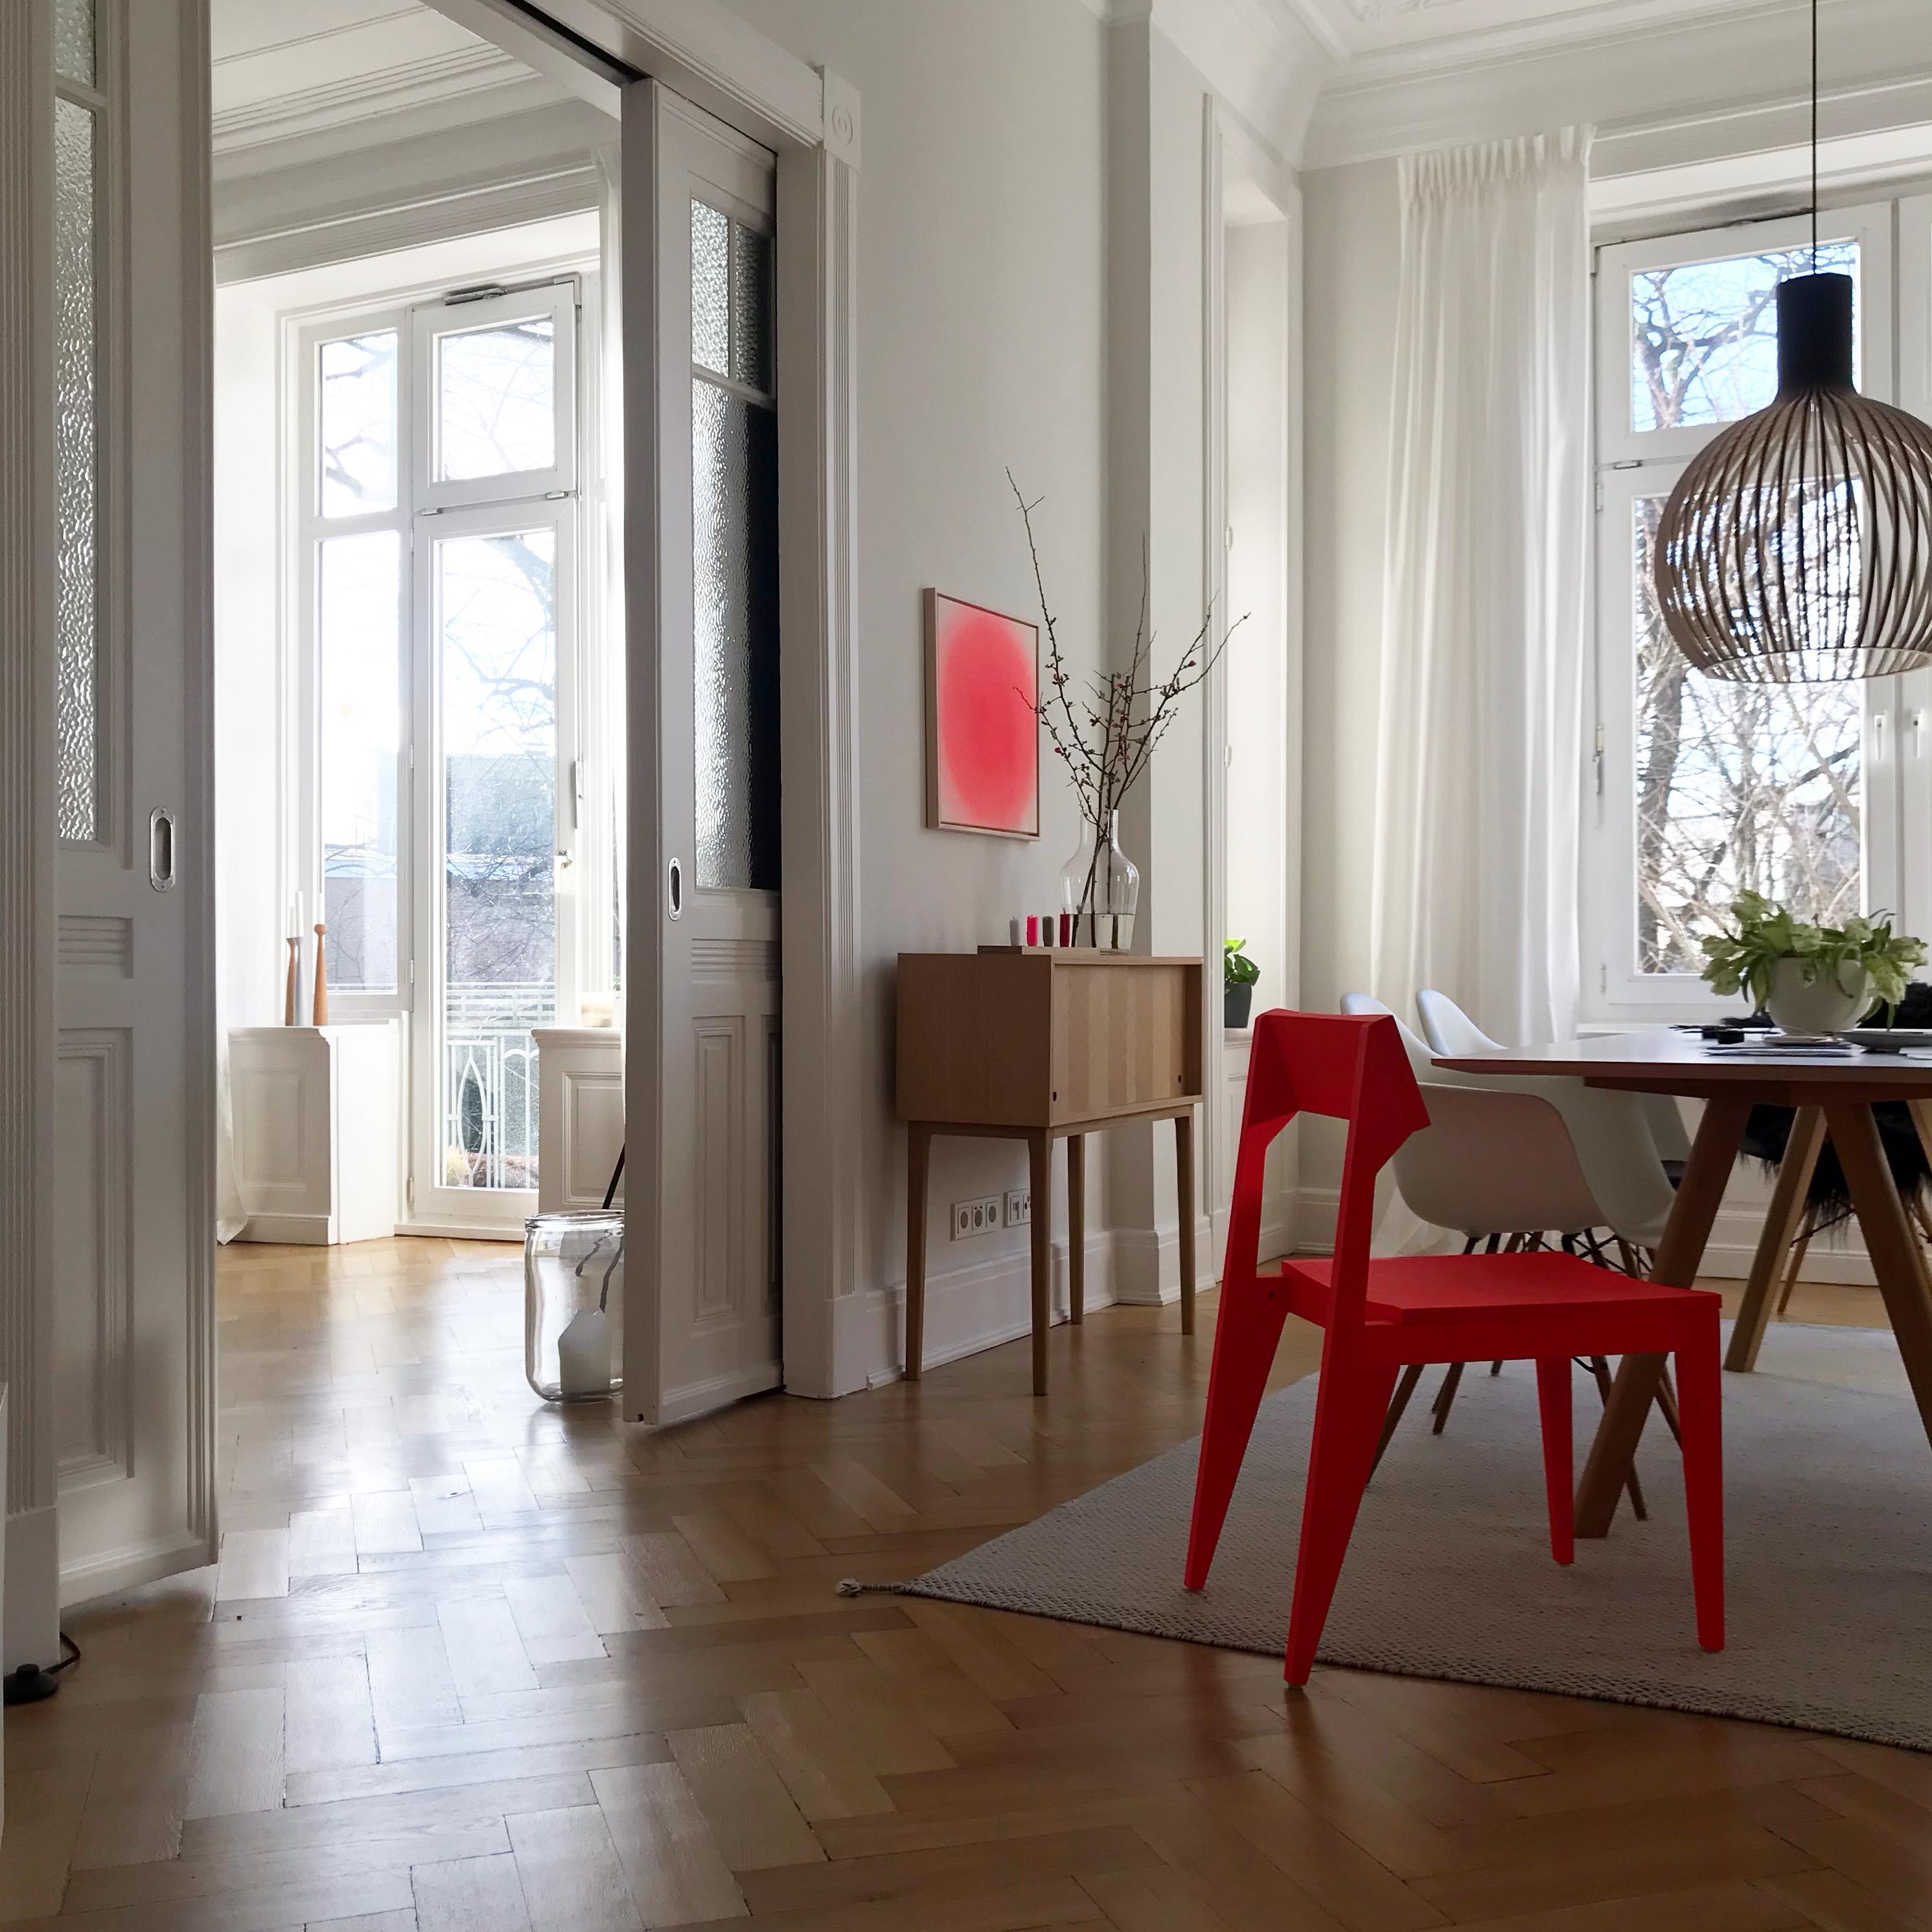 #living #wohnen #livingroom #diningroom #farbklecks #colorful #redchair #couchstyle 